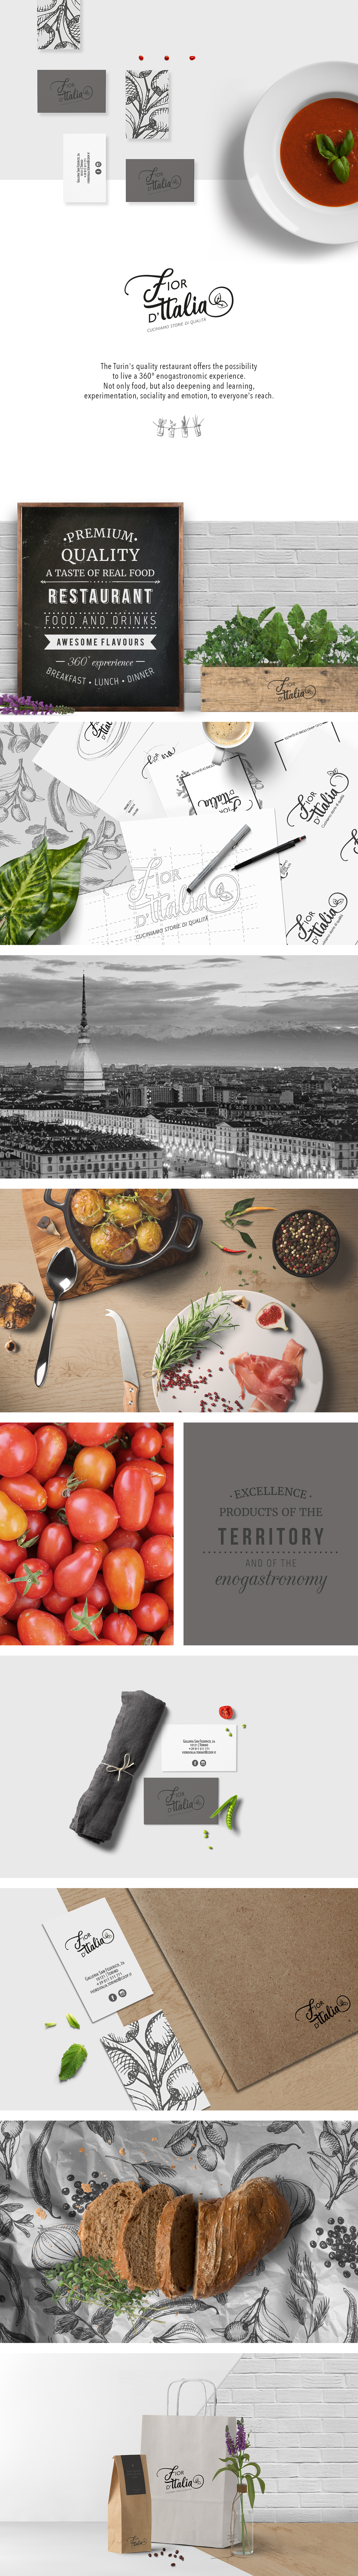 italian cuisine italian restaurant restaurant gastronomy Packaging menu Food  Pasta Quality inspire